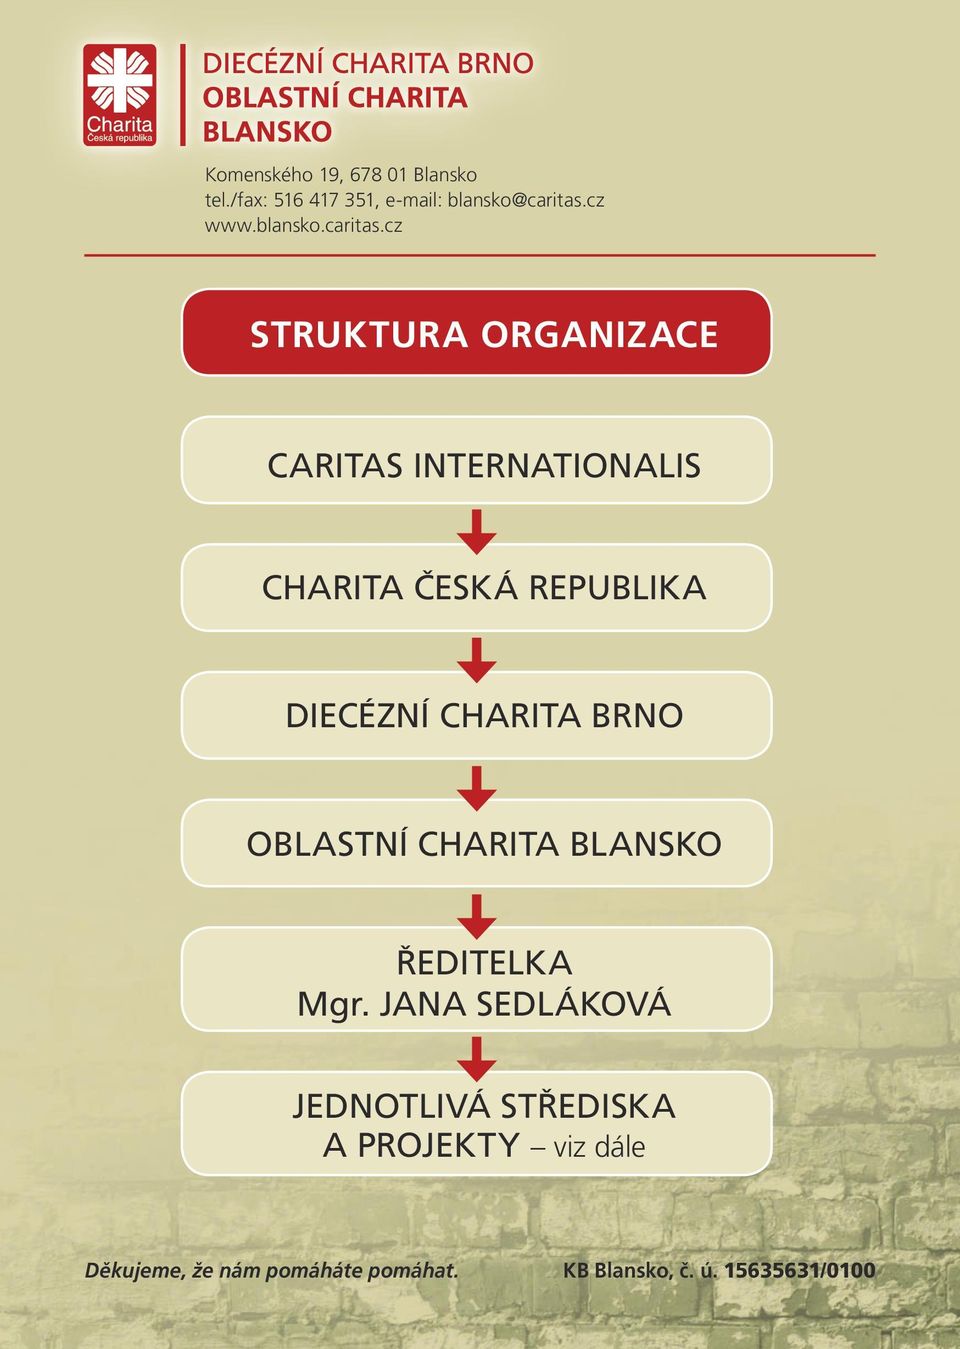 charita Brno Oblastní charita Blansko ředitelka Mgr.